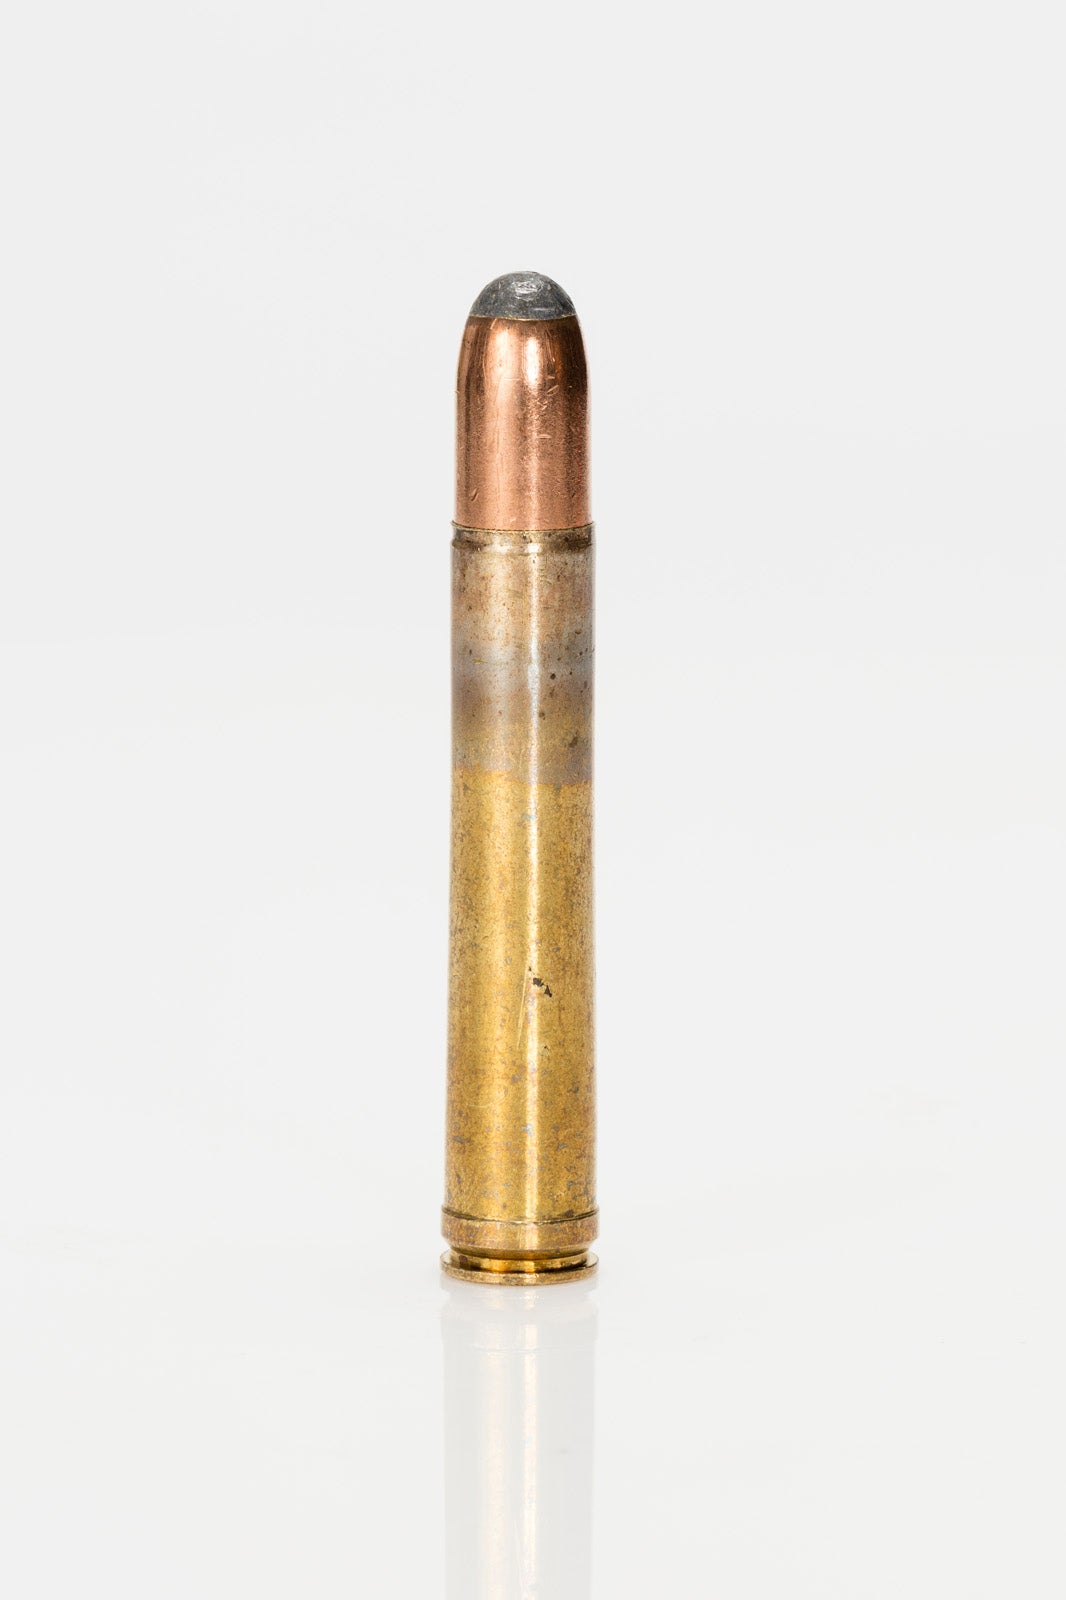 458 Winchester Magnum cartridge